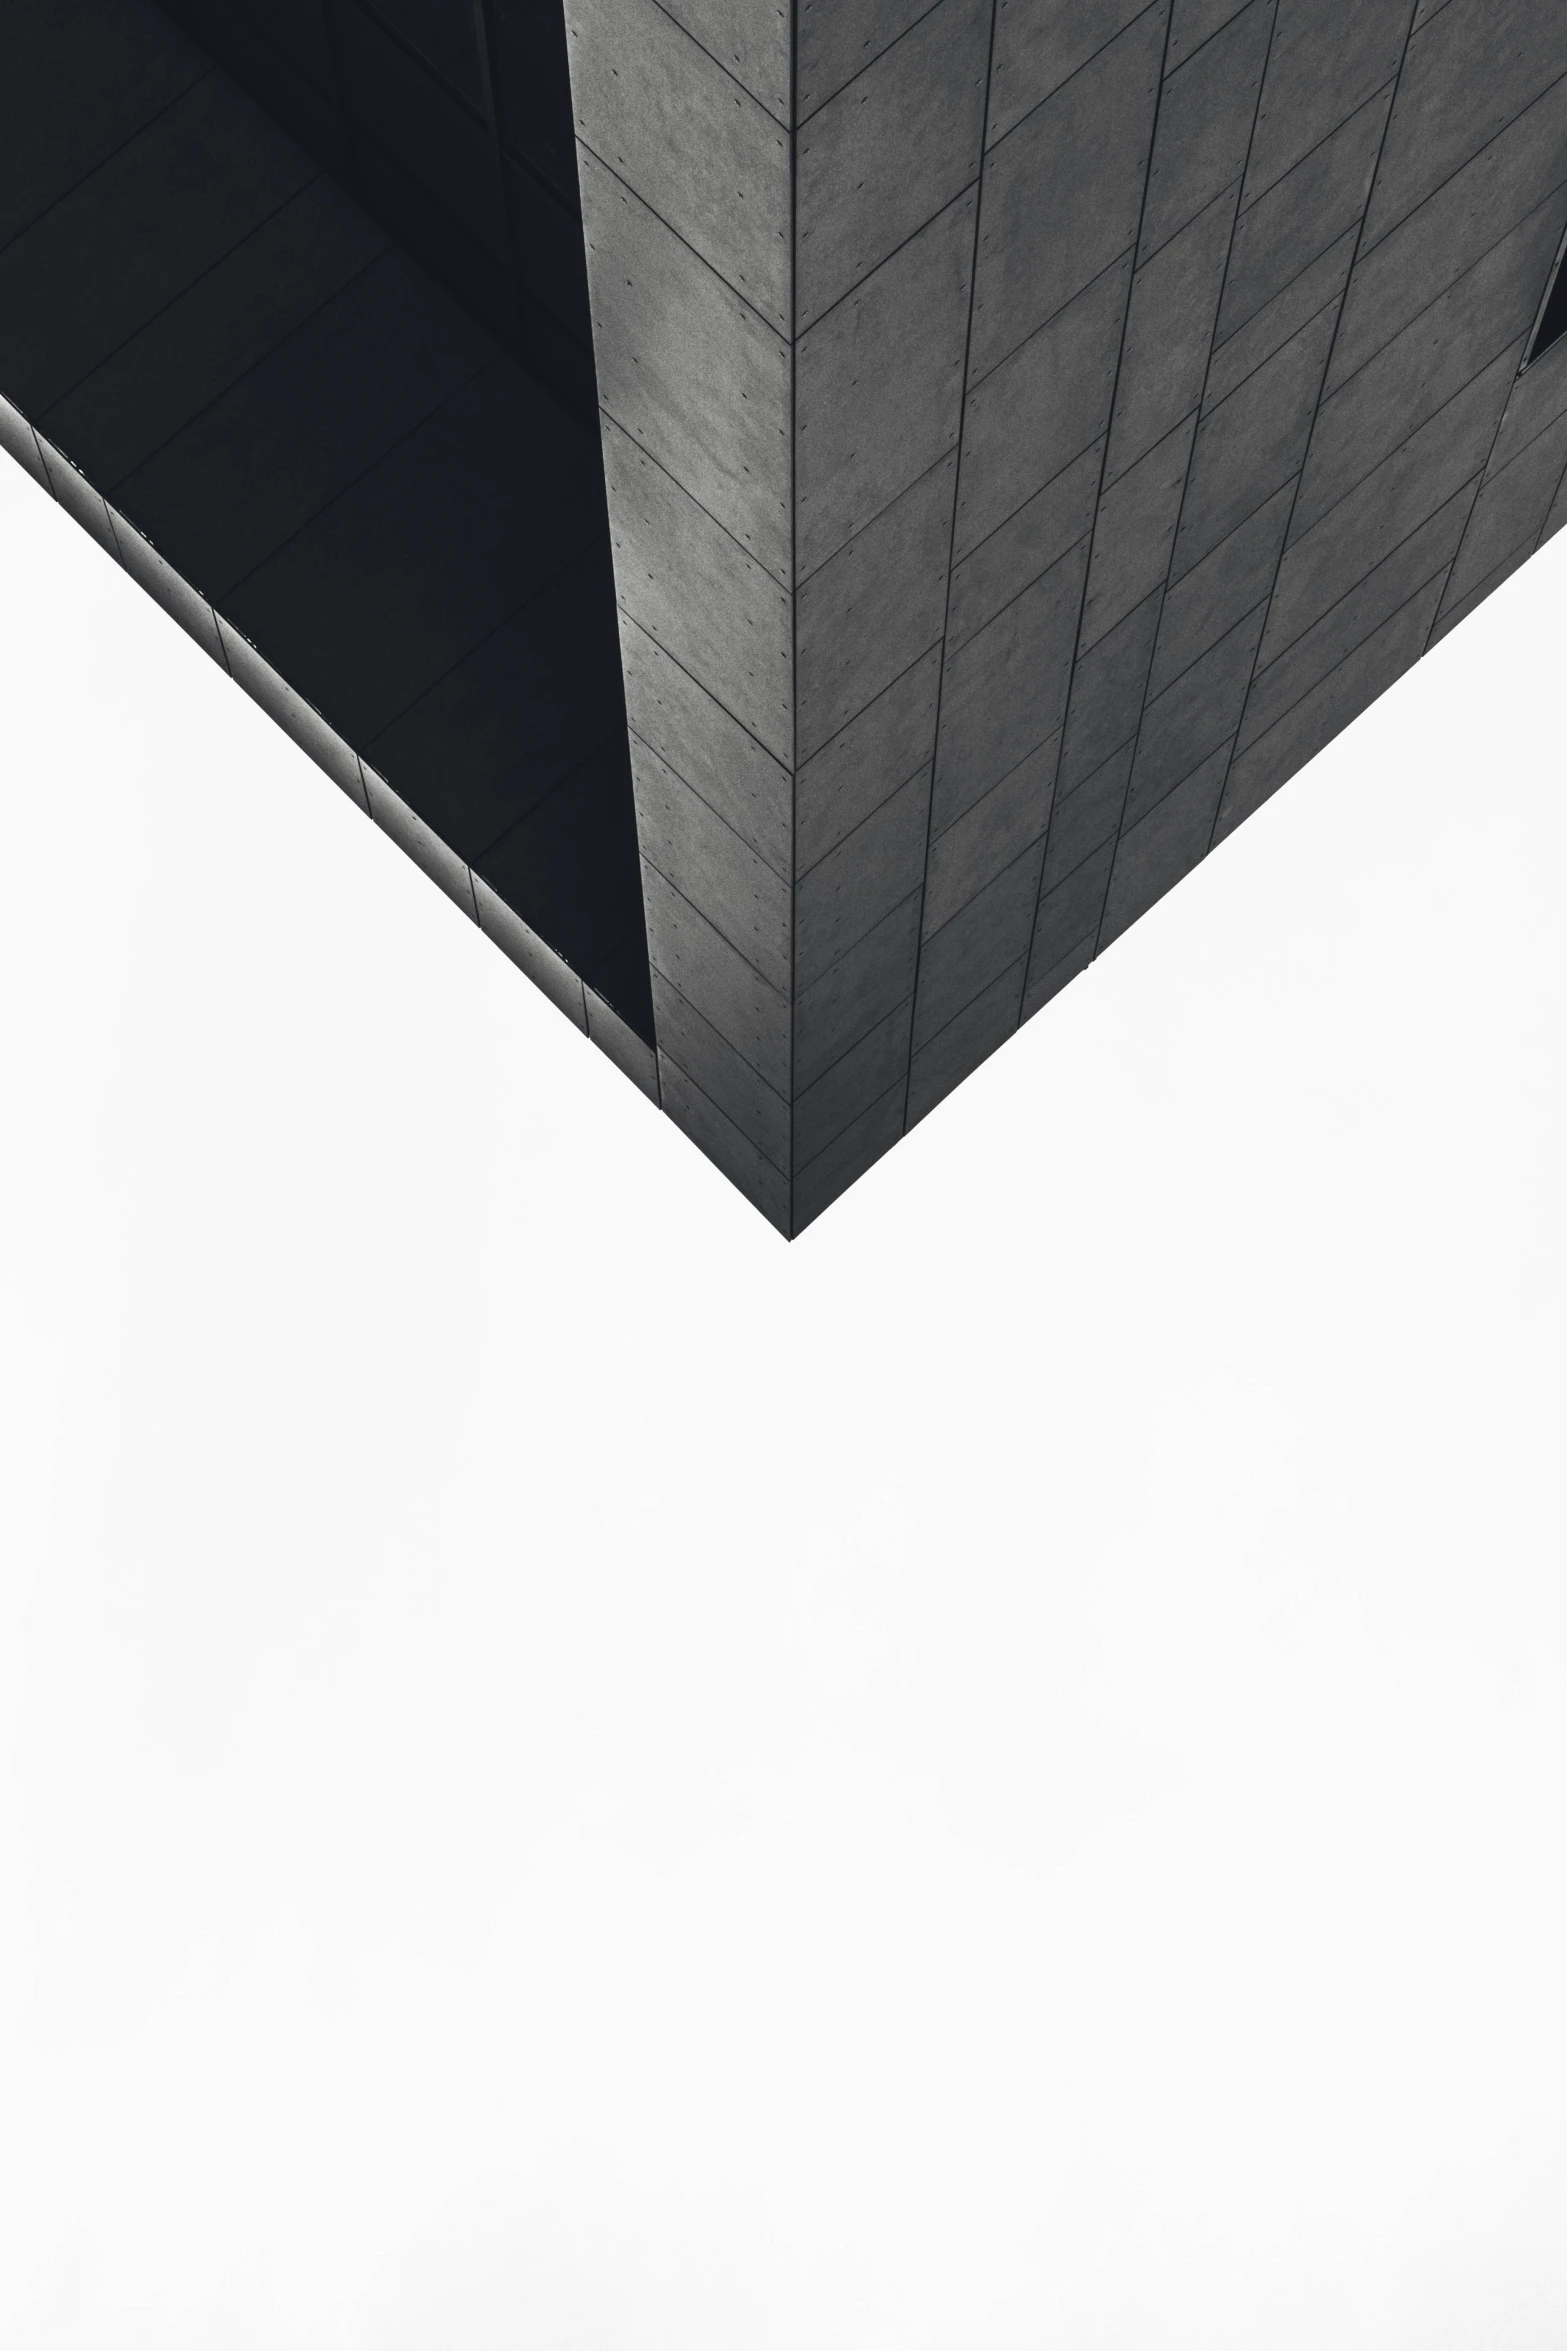 a plane flies through a grey square near a building